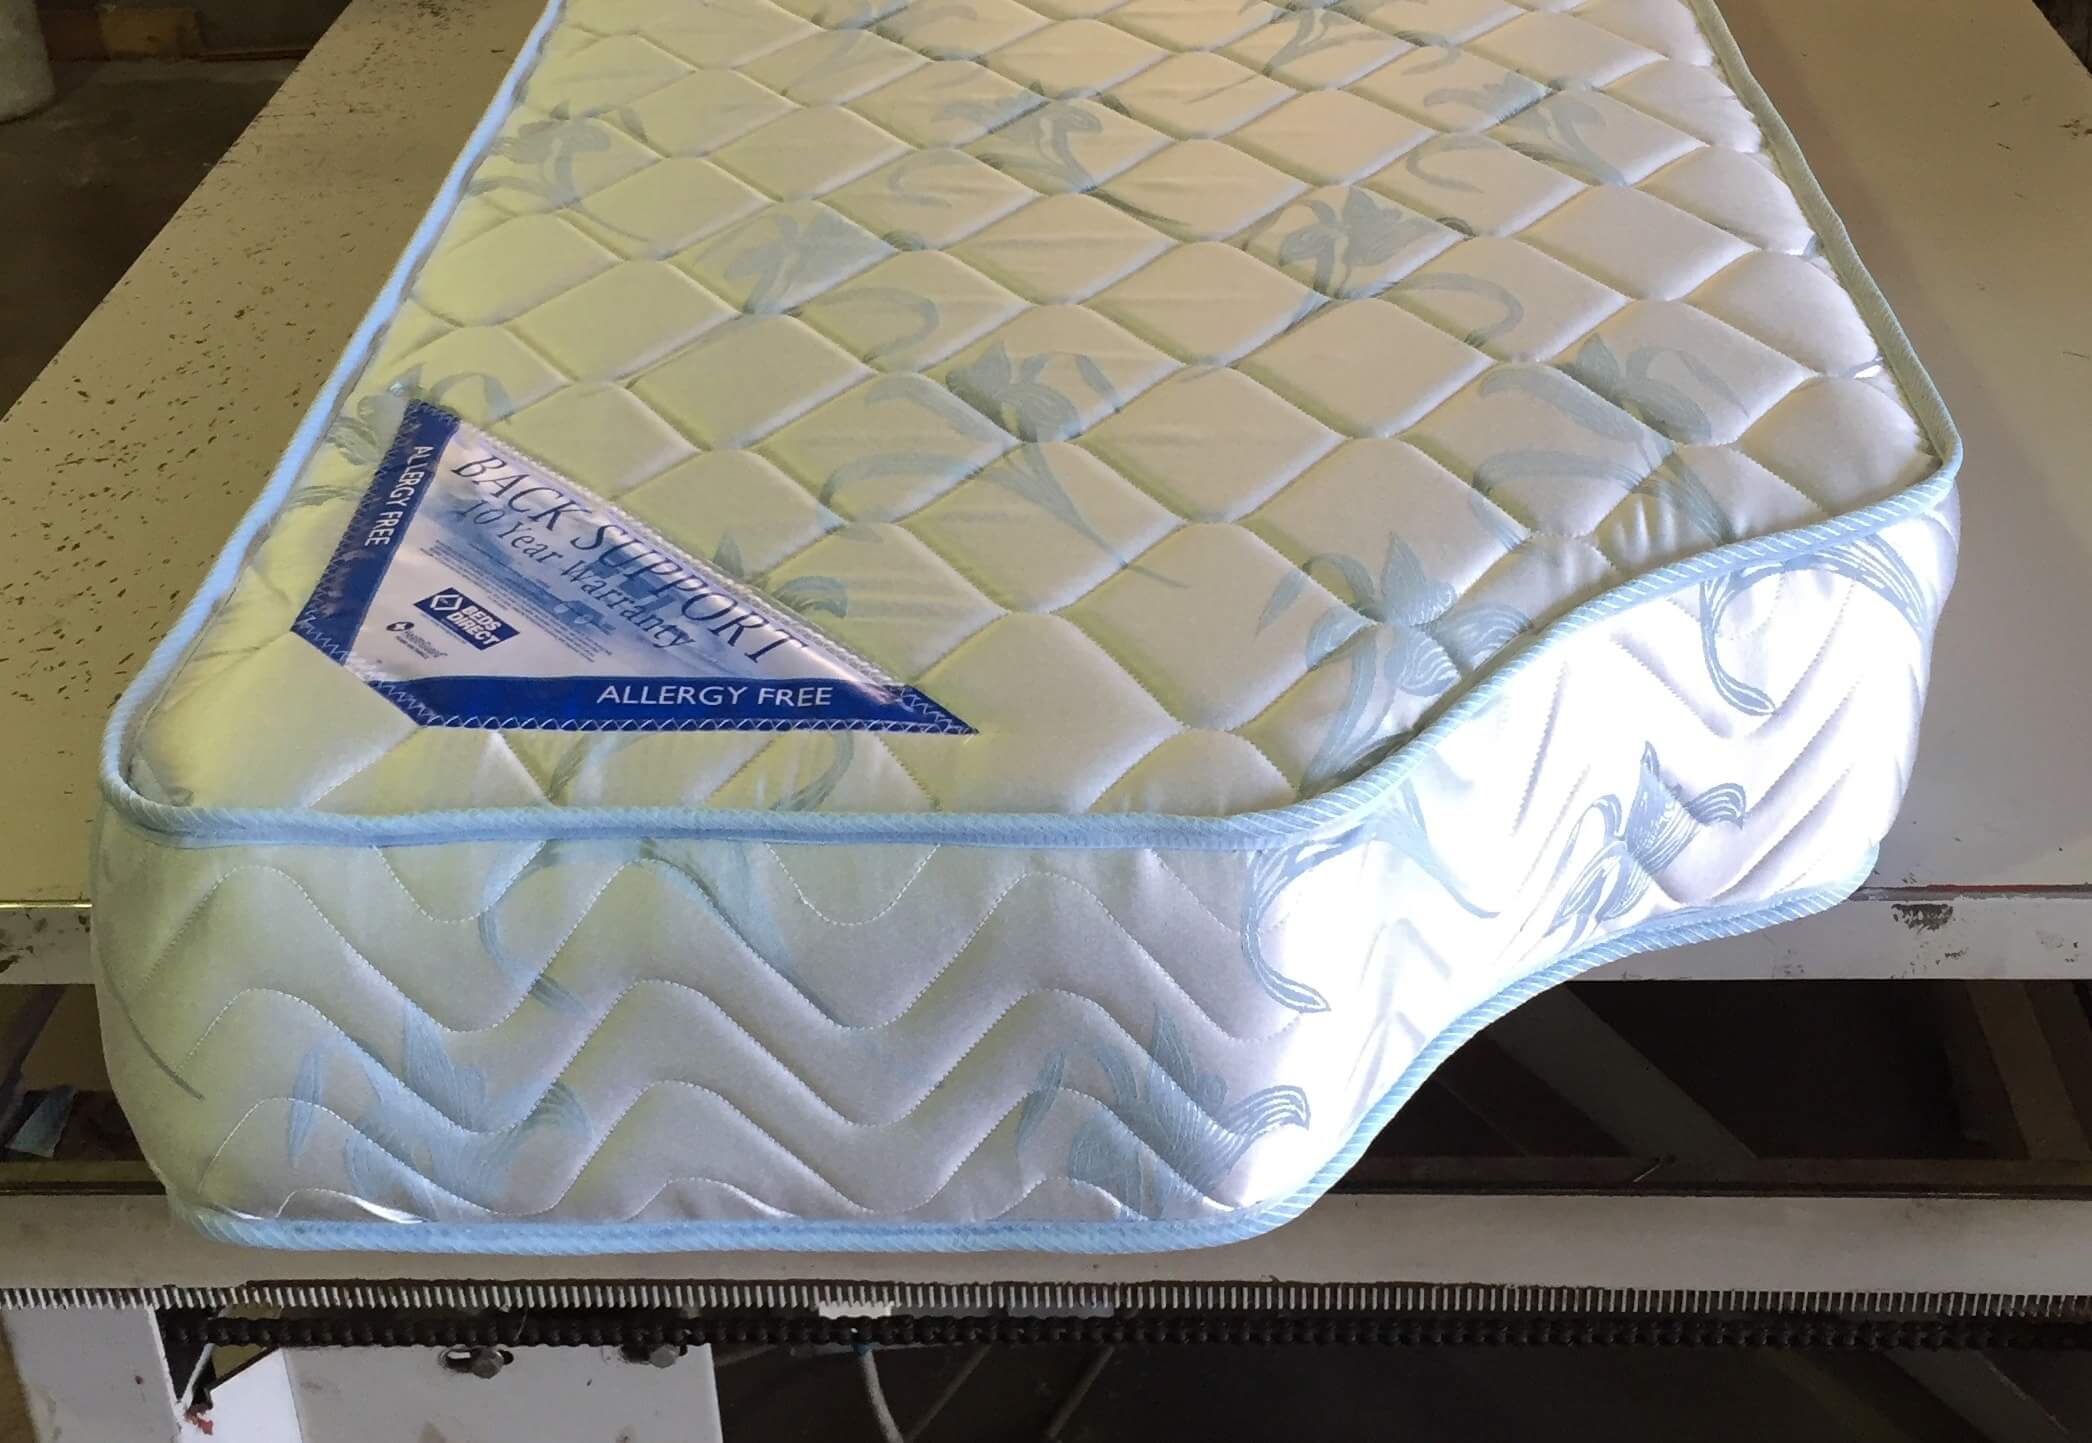 custom size mattress topper